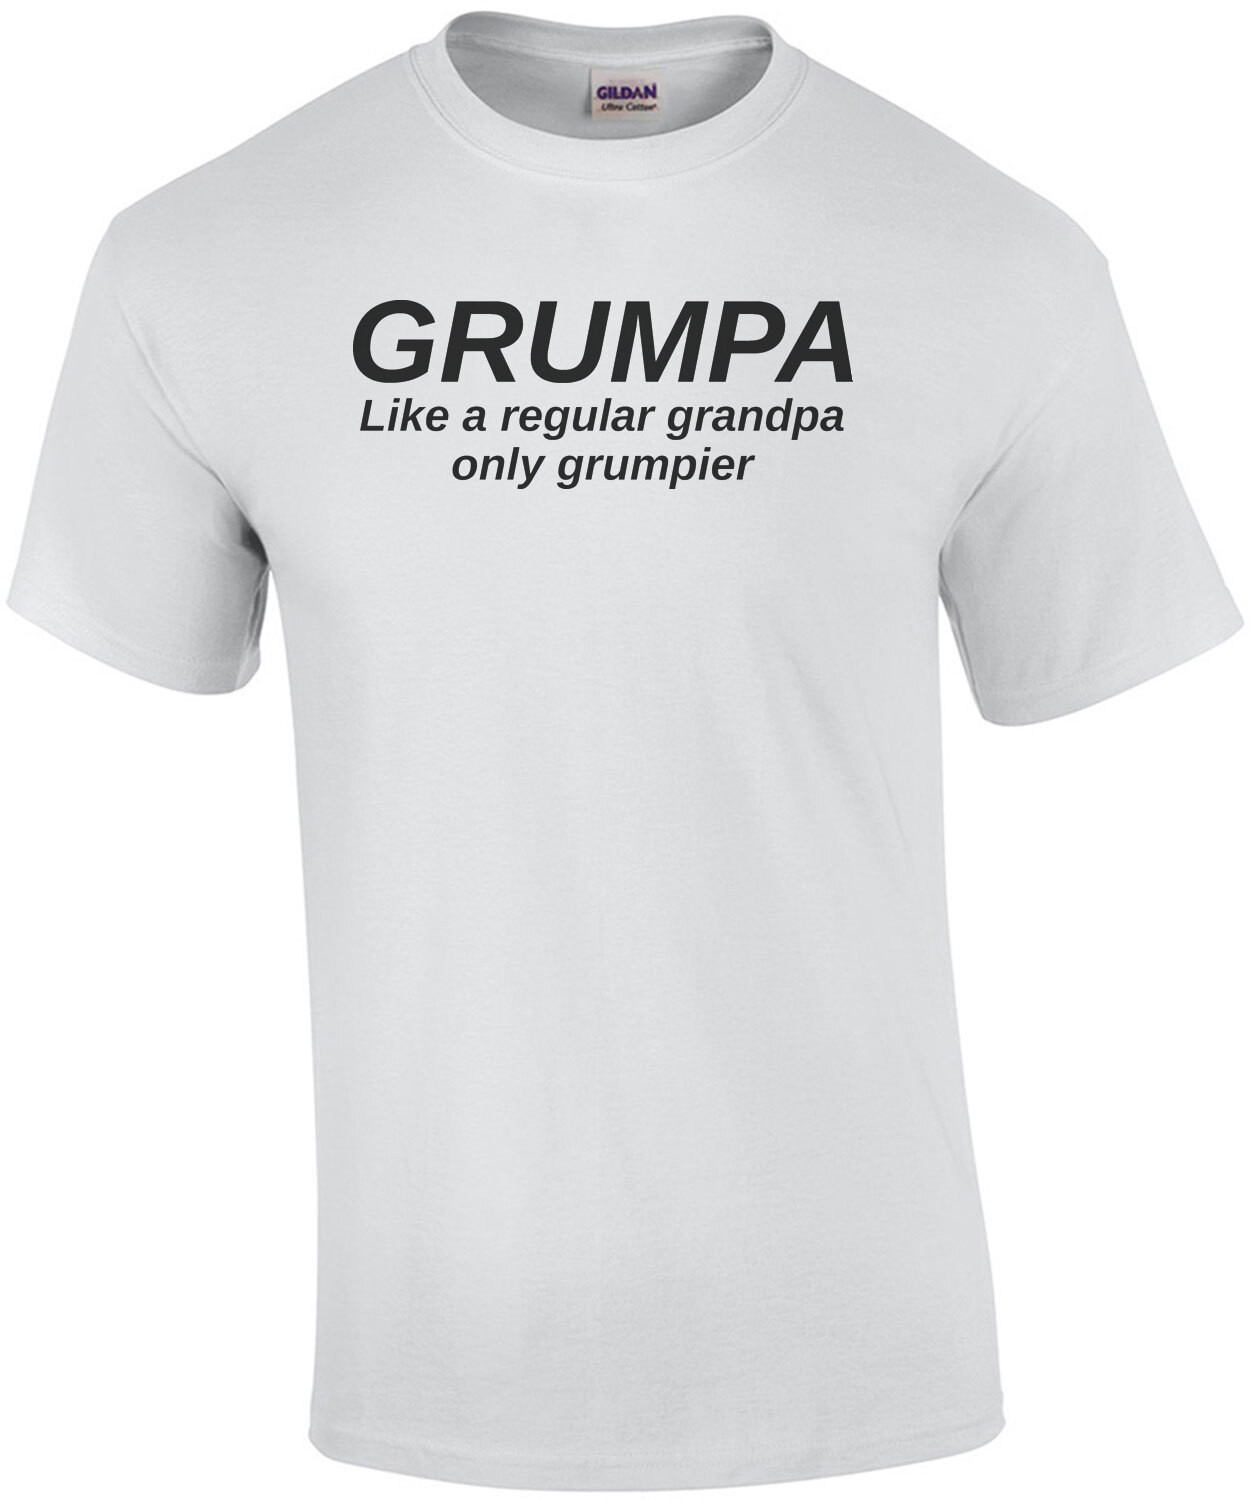 Grumpa - like a regular grandpa only grumpier.